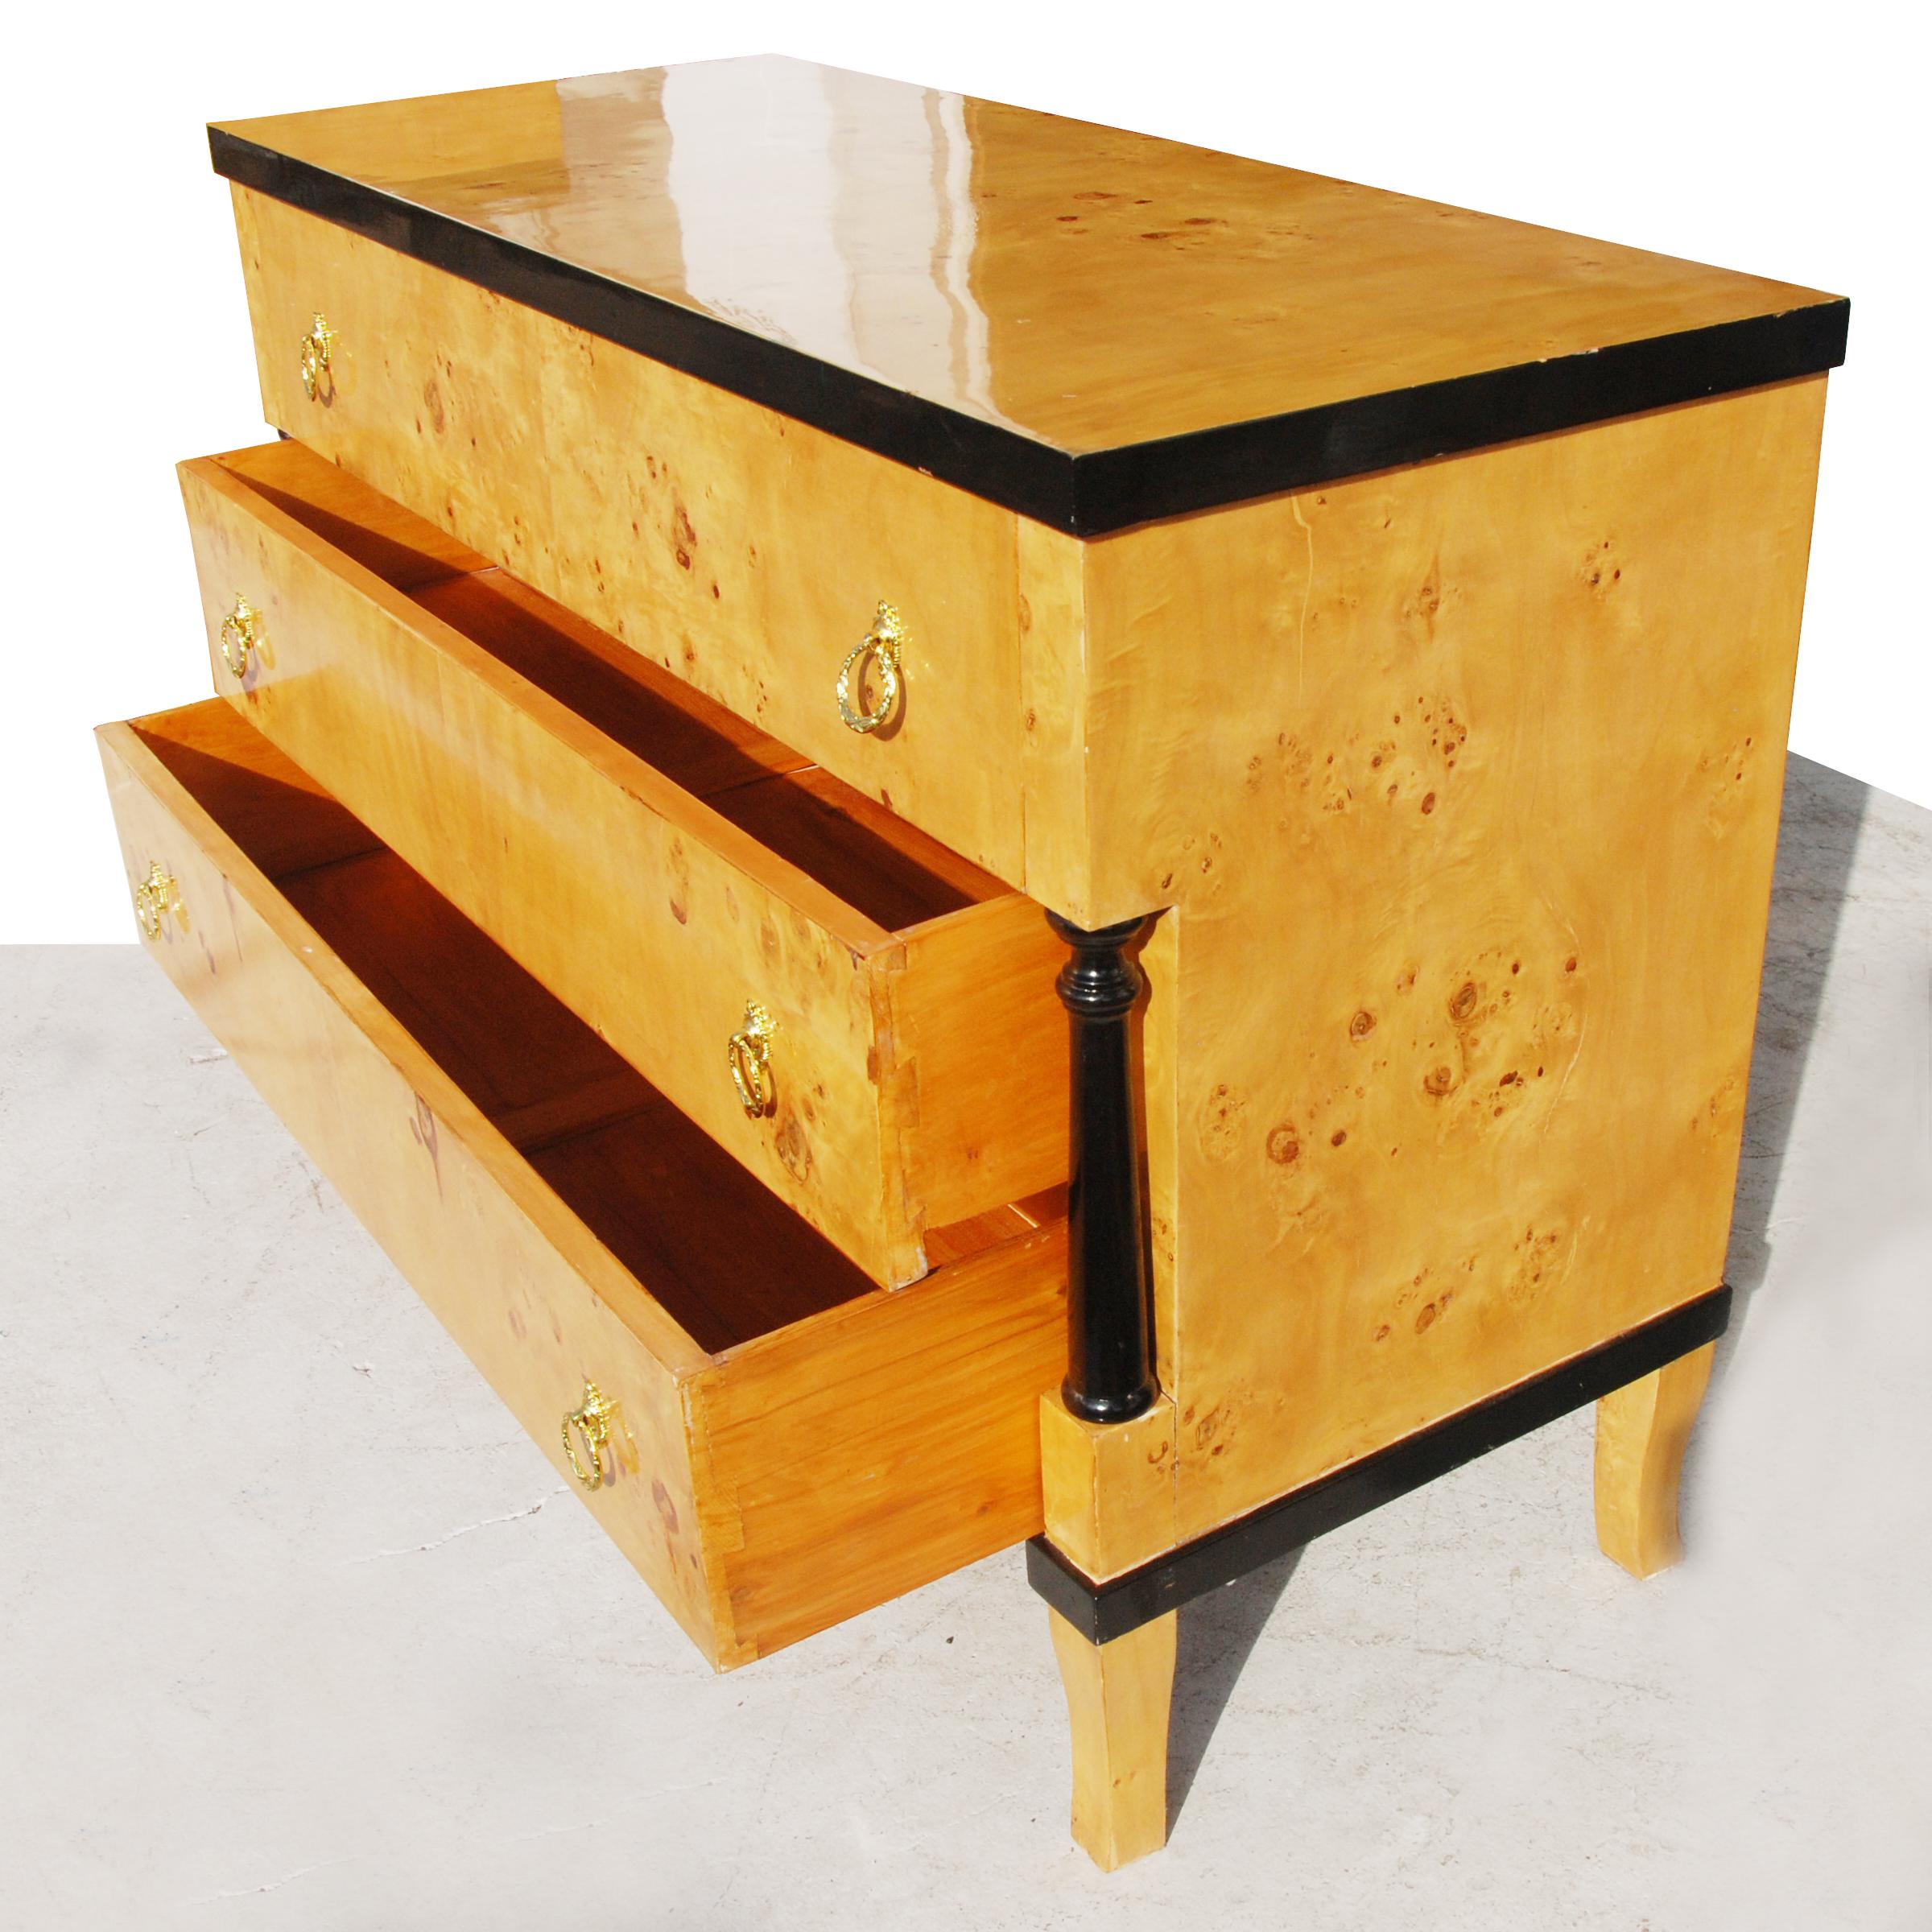 Burled wood Art Deco style dresser with ebonized trim. Three drawers and brass ring pulls.